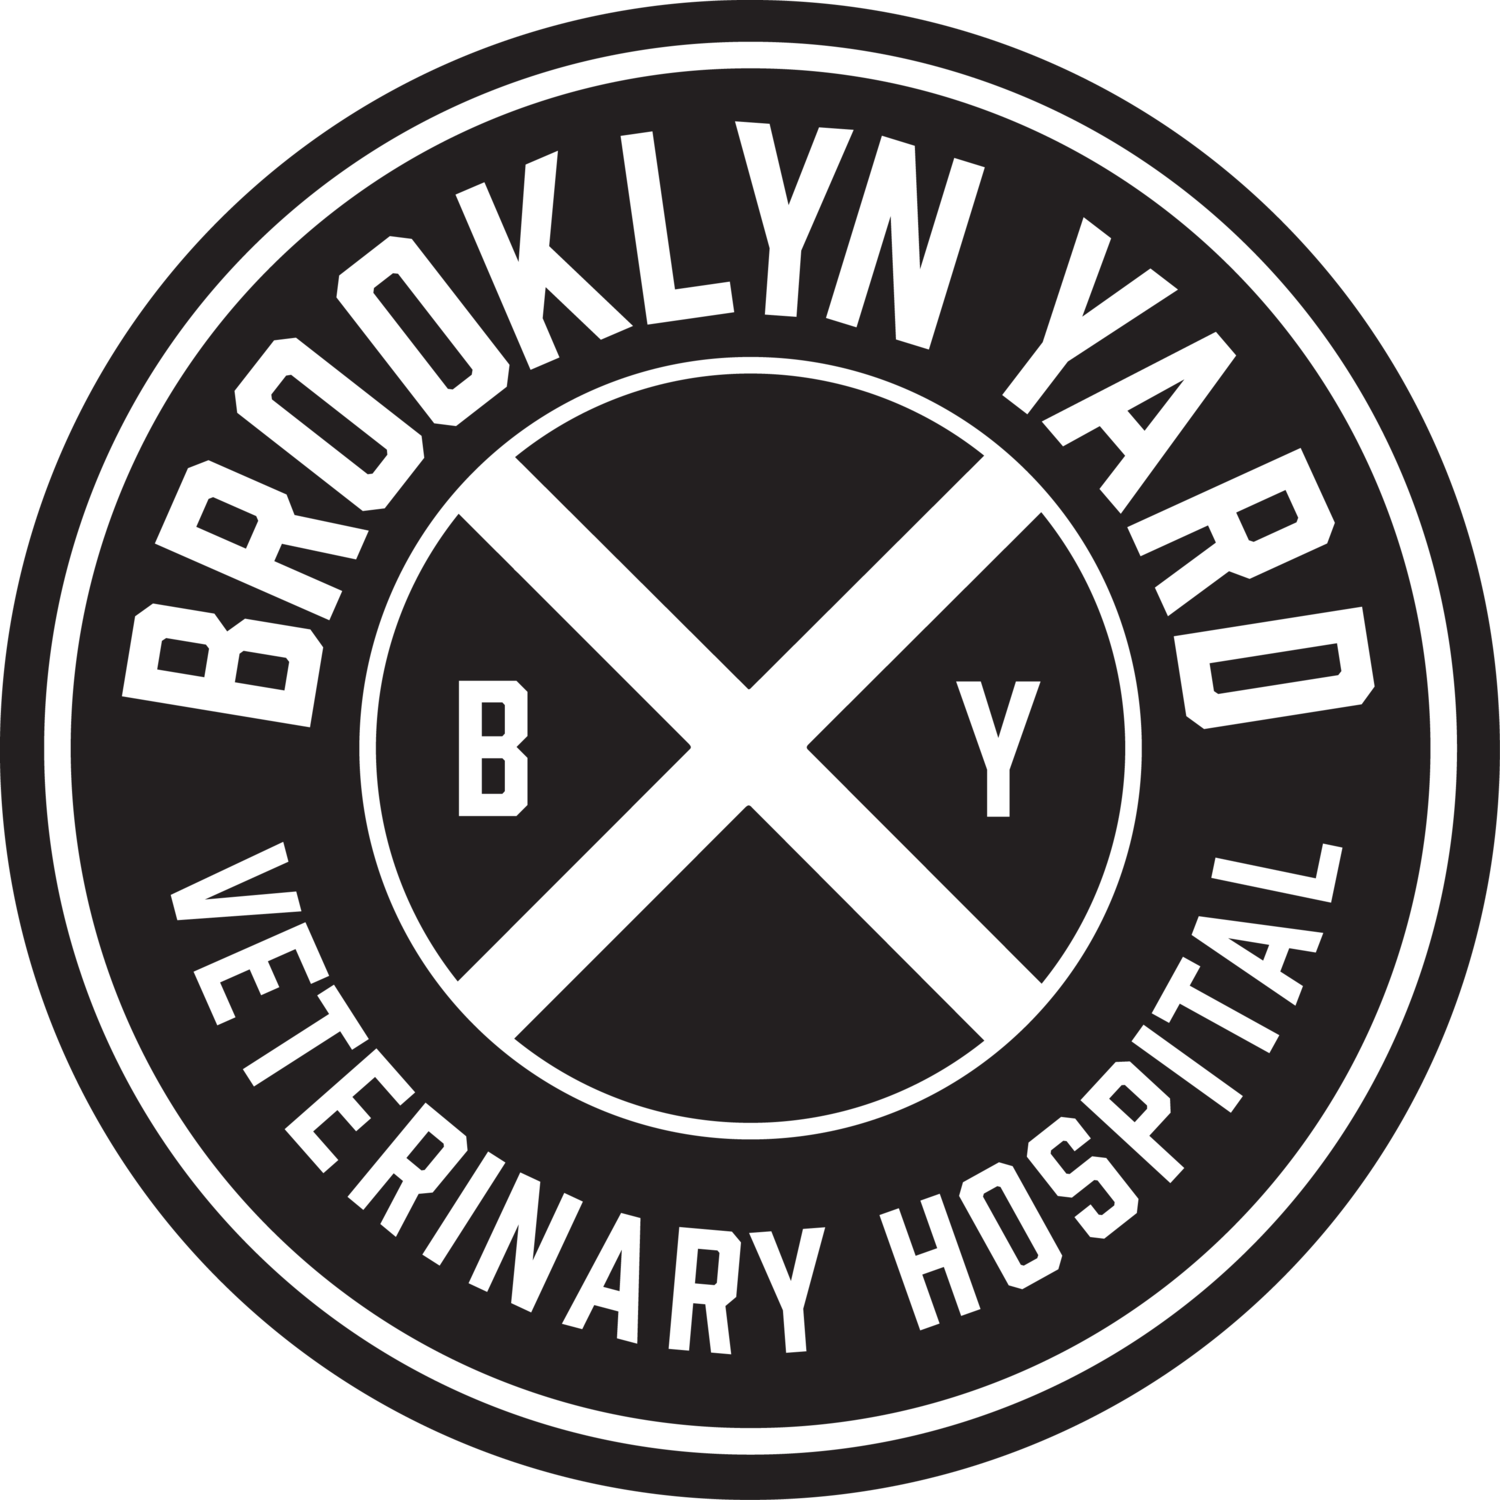 Brooklyn Yard Veterinary Hospital